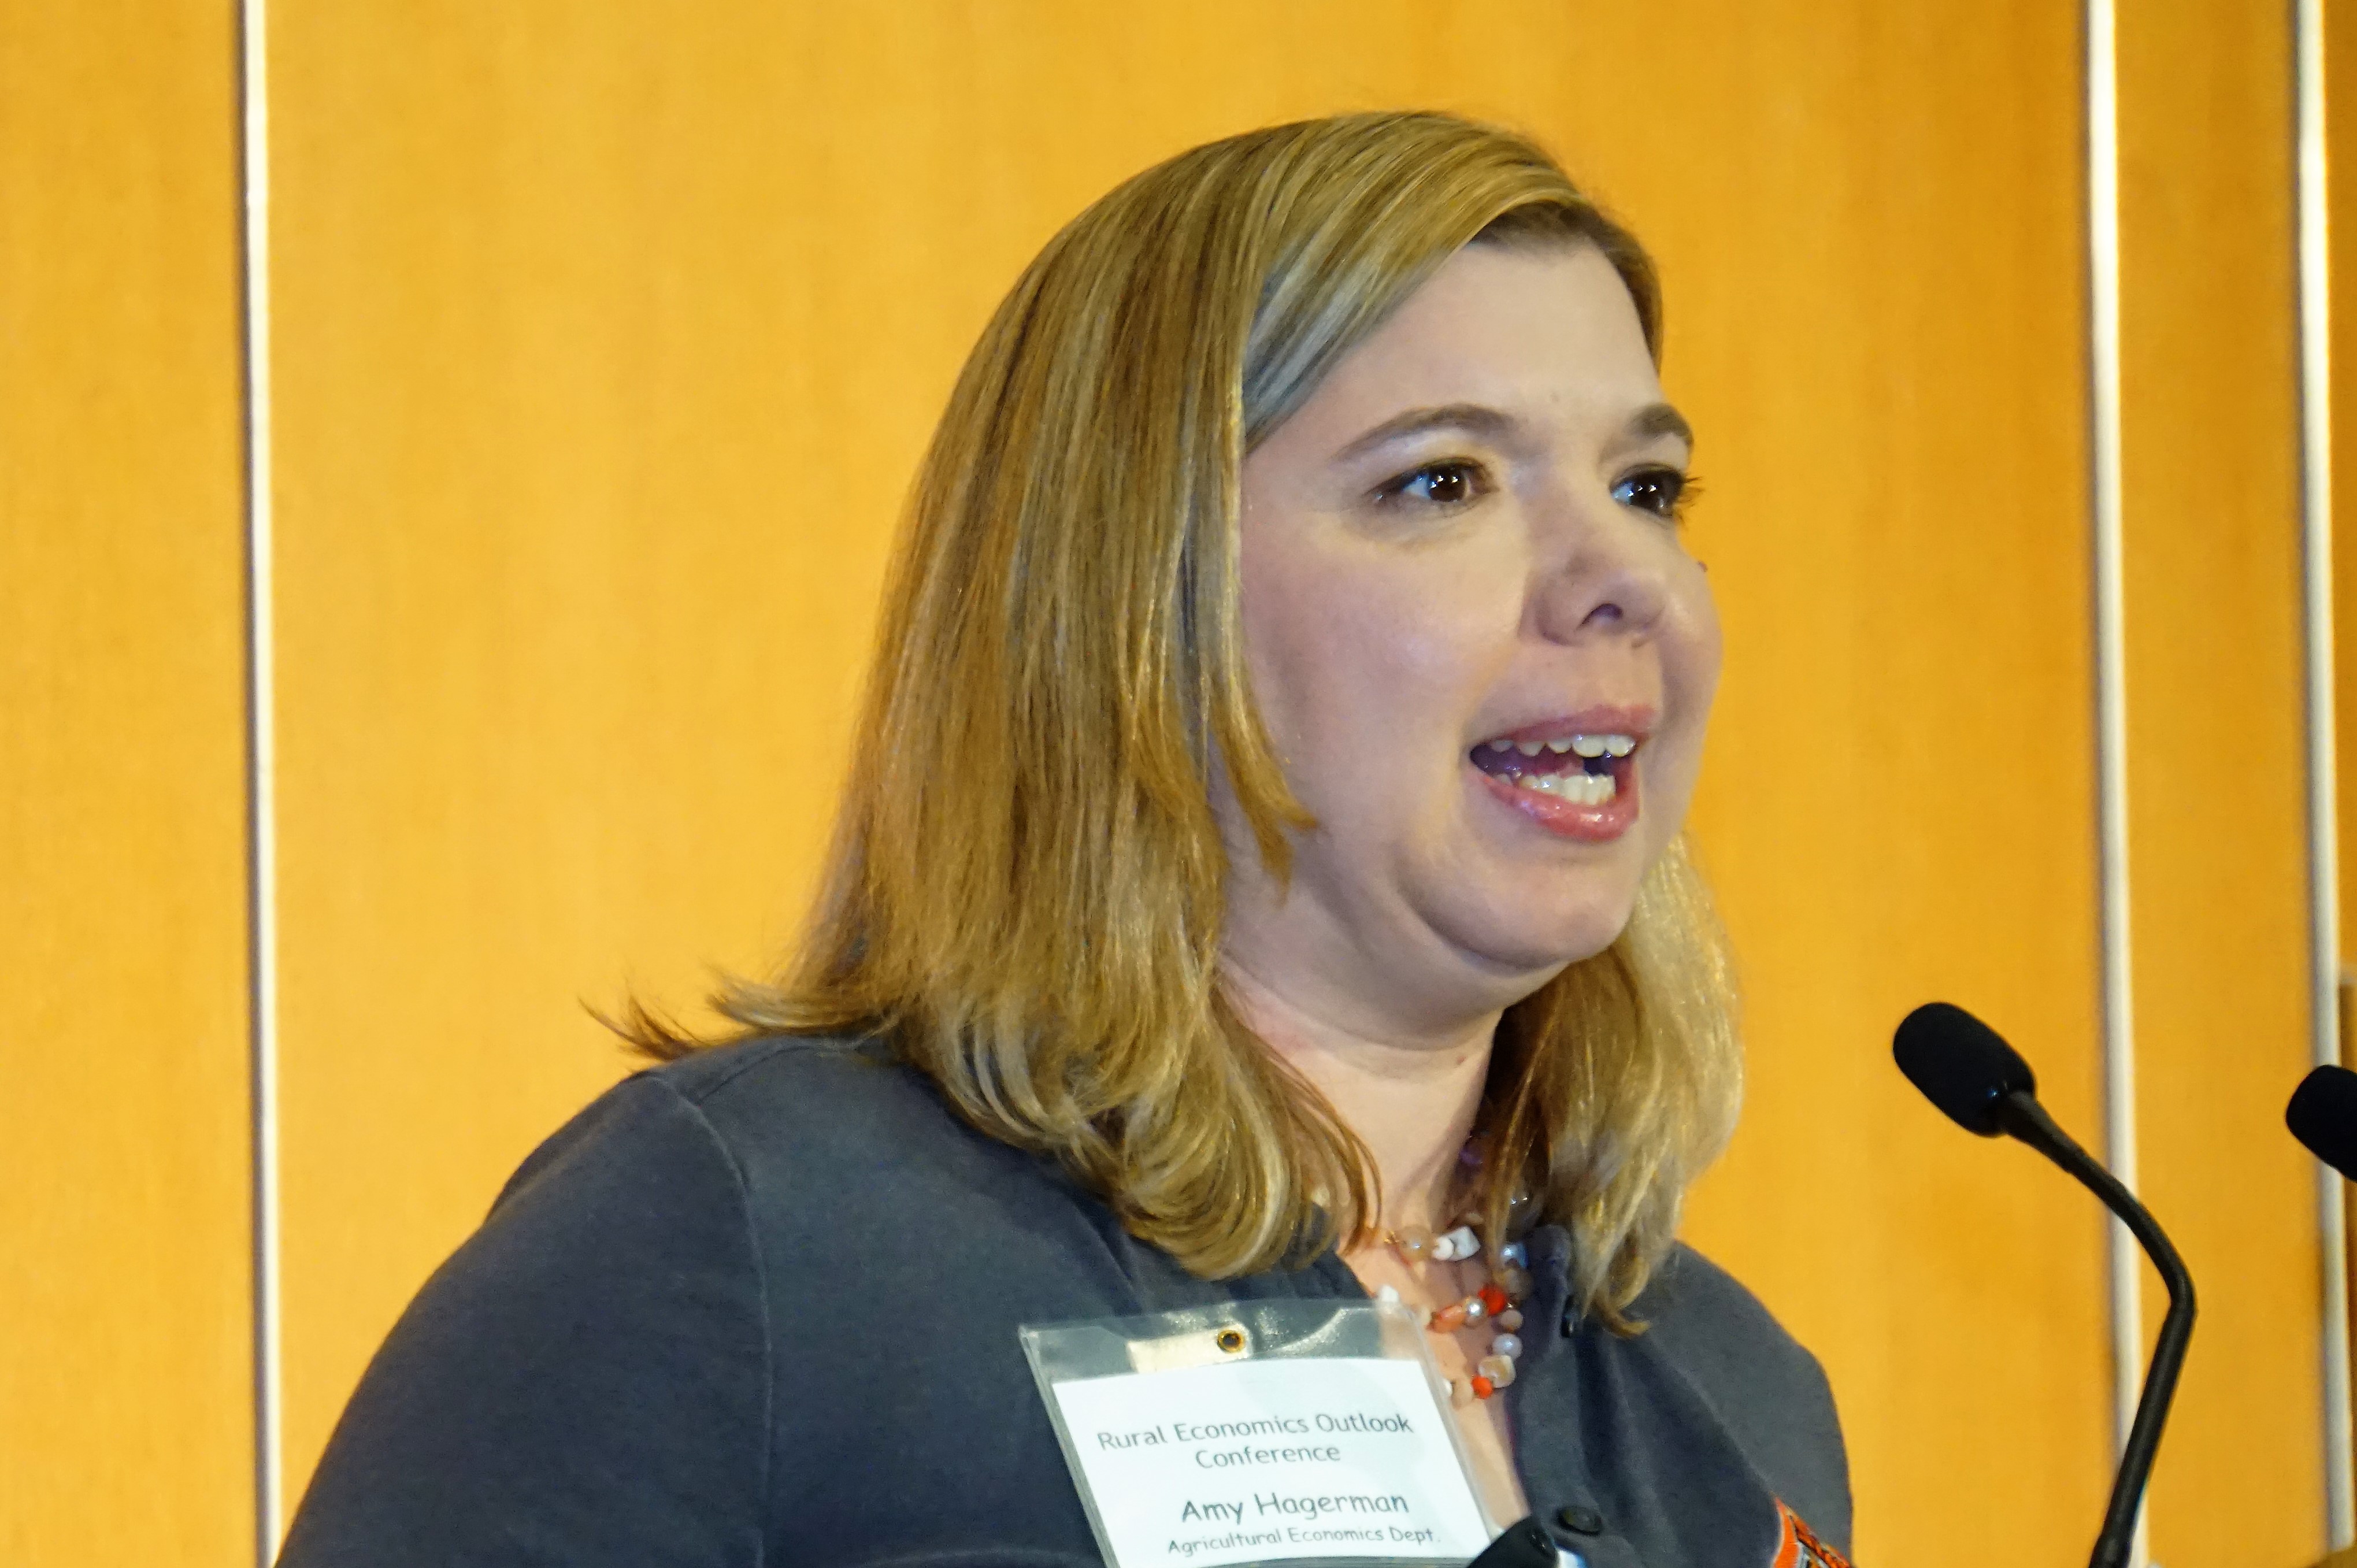 Dr. Amy Hagerman gives Details on Coronavirus Food Assistance Program